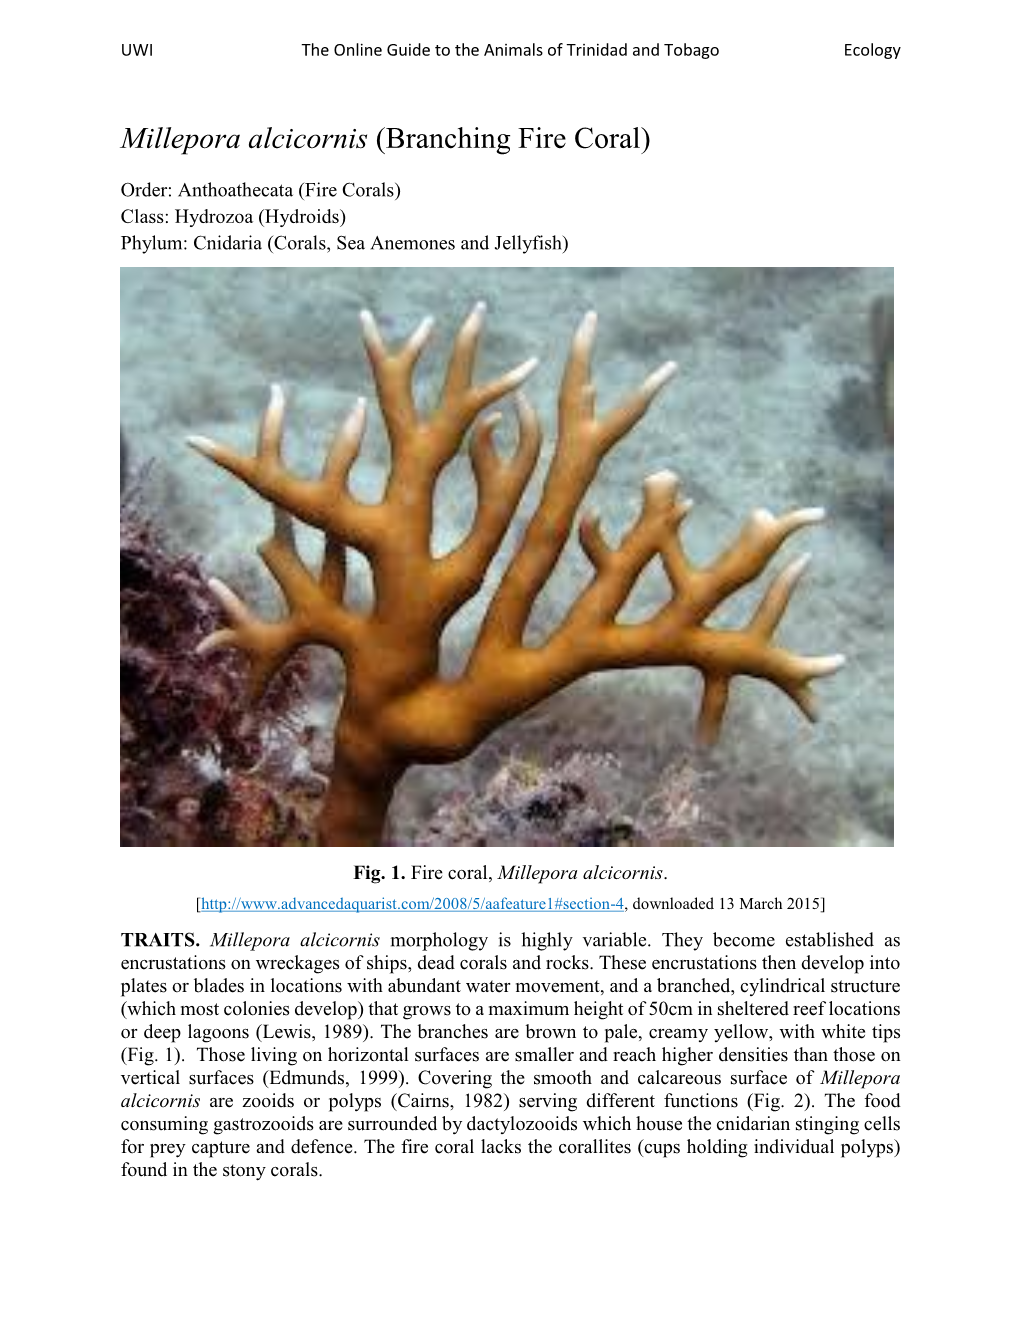 Millepora Alcicornis (Branching Fire Coral)